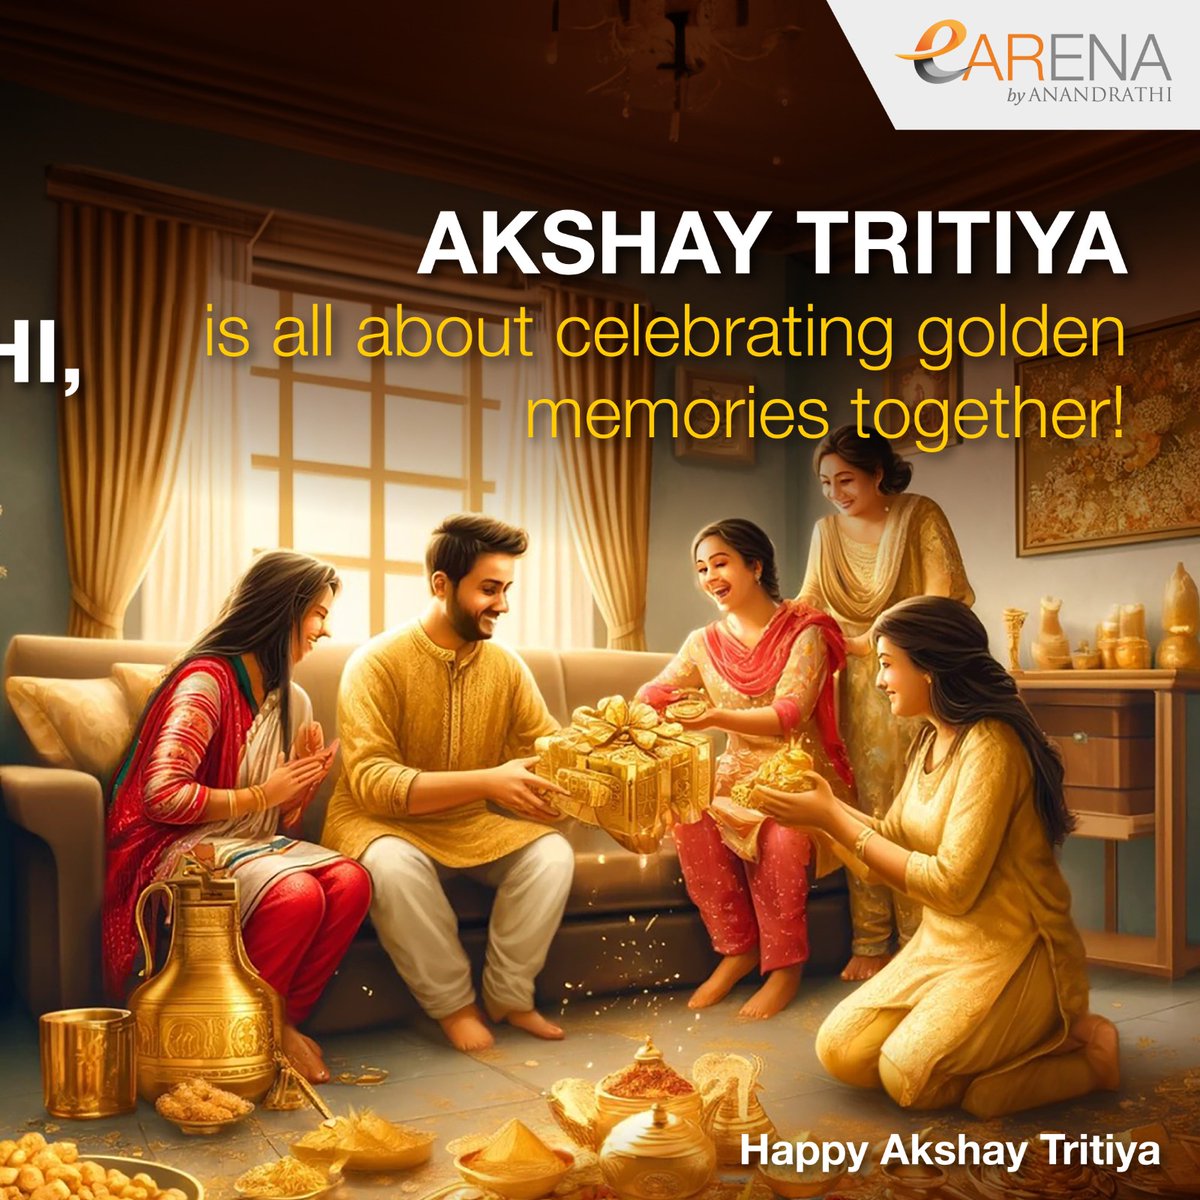 Have a golden, glorious, and gleeful Akshay Tritiya!! 
Swipe to celebrate all the sunhere bonds we share on this auspicious day🪙➡️

#AkshayTritiya #HappyAkshayTritiya #golden #gold #May10 #topical #moment #eARENA #eARENAbyAnandRathi #AnandRathi